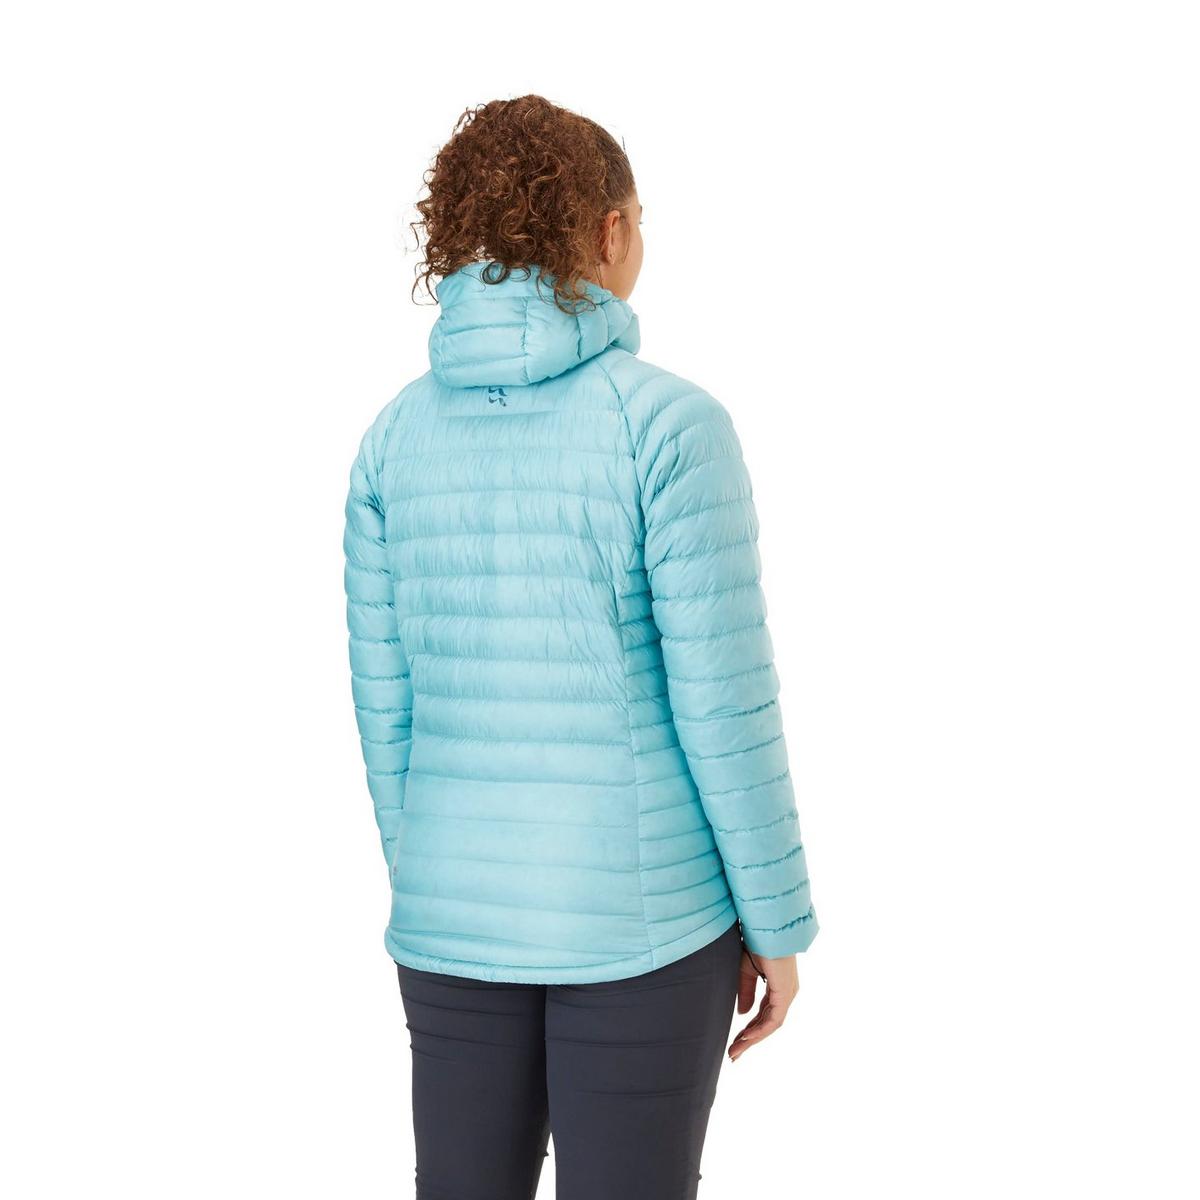 Rab Women's Microlight Alpine Jacket - Meltwater